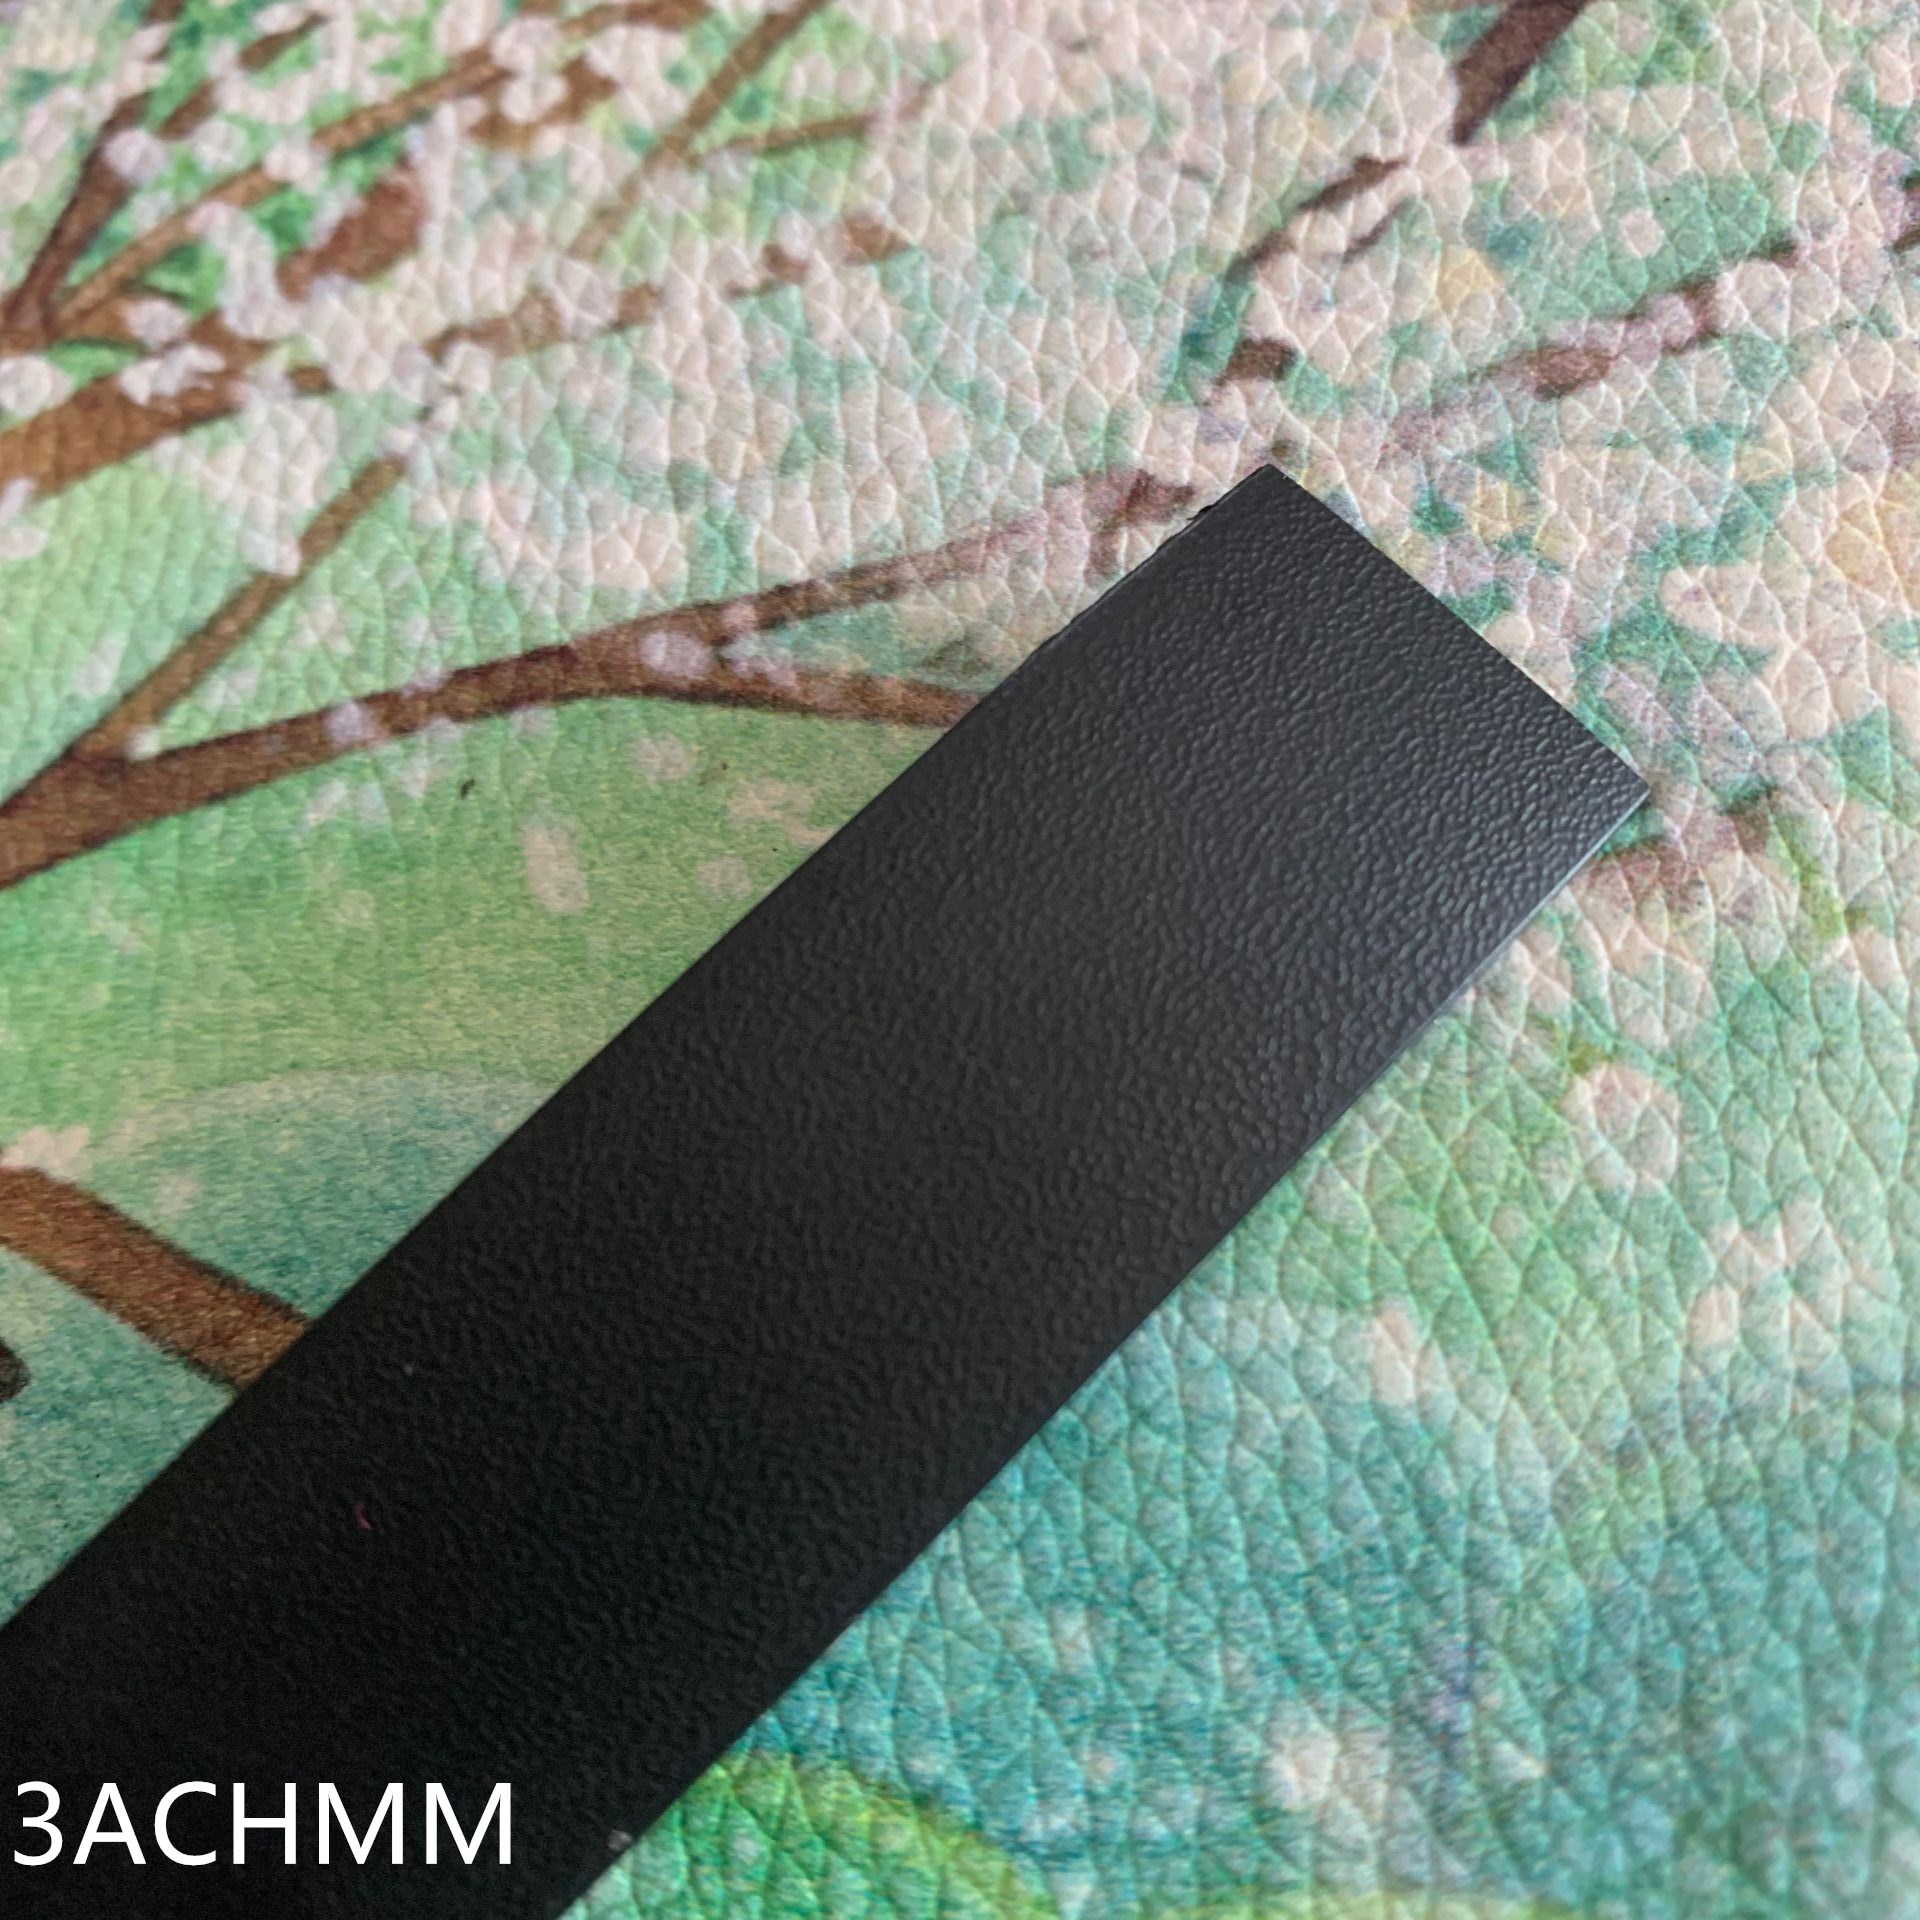 Preglued Veneer Edging PVC Edge Banding Trimmer Wood Kitchen Wardrobe Board Edgeband Odd Black Edge Tape